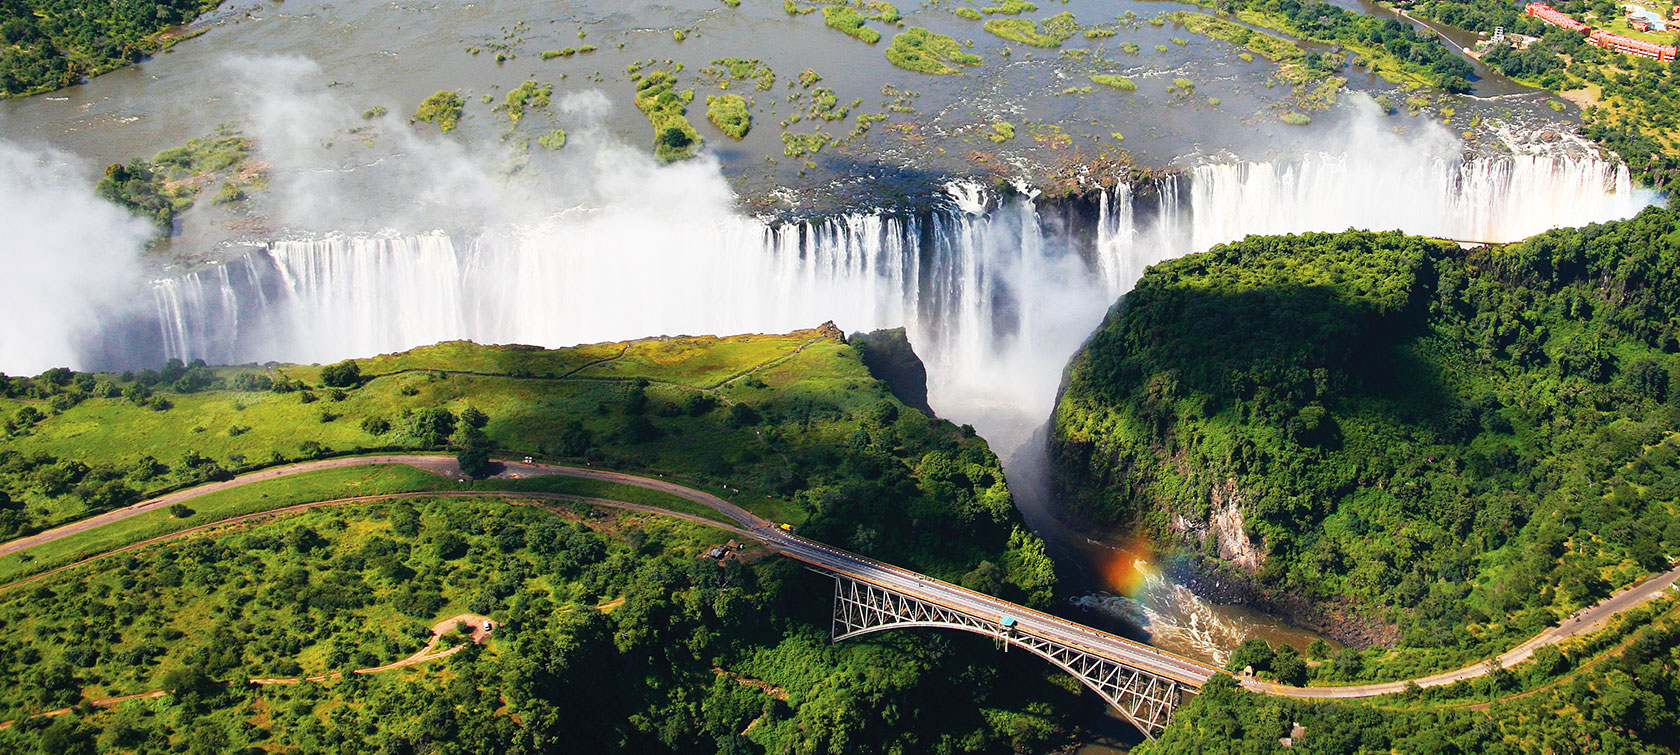 2015-africa-zimbabwe-victoria-falls-extension-ak-hero